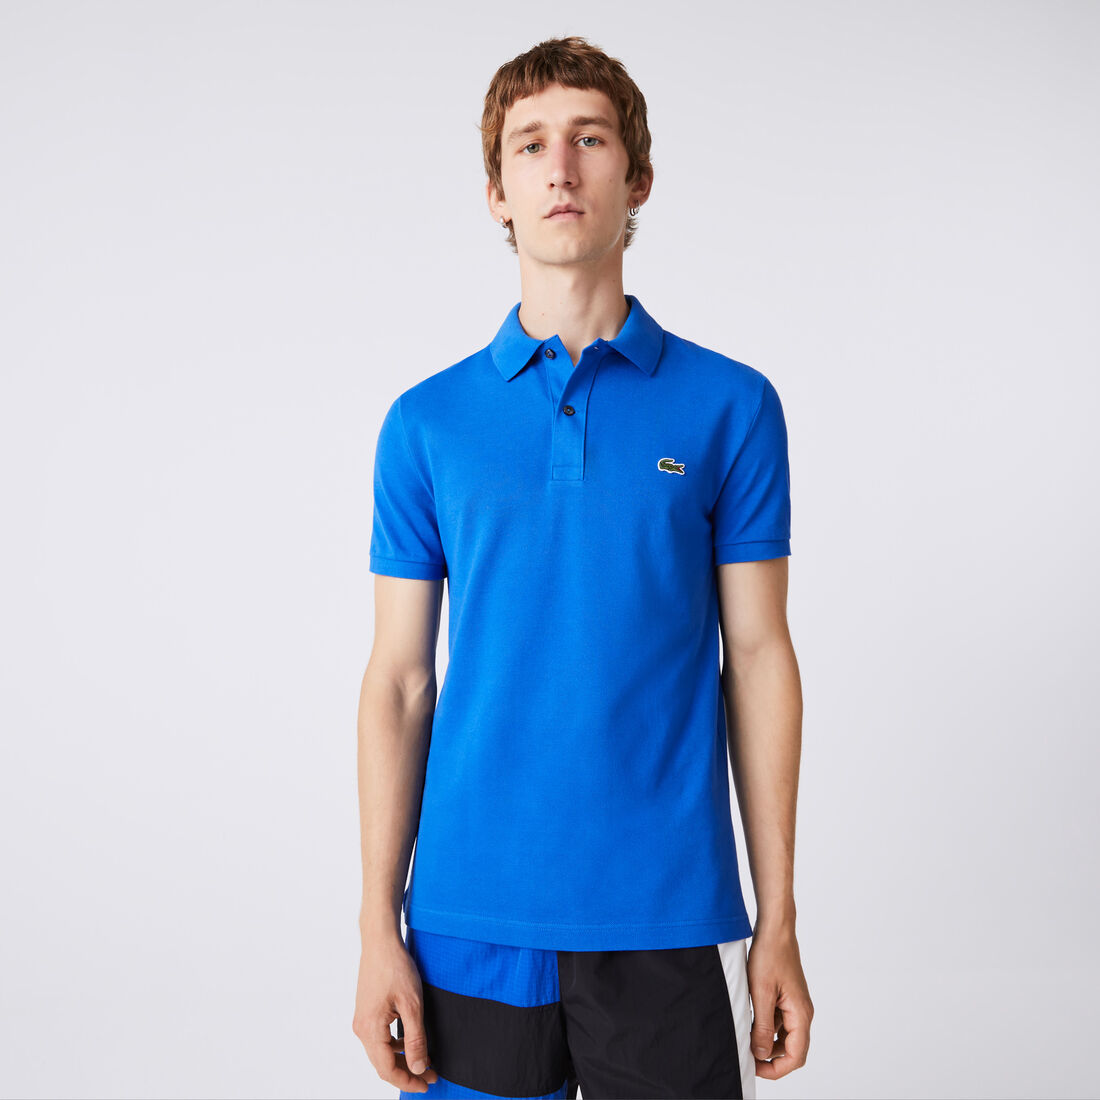 Lacoste Slim Fit In Petit Piqué Polo Shirts Herren Blau | VKMX-82371